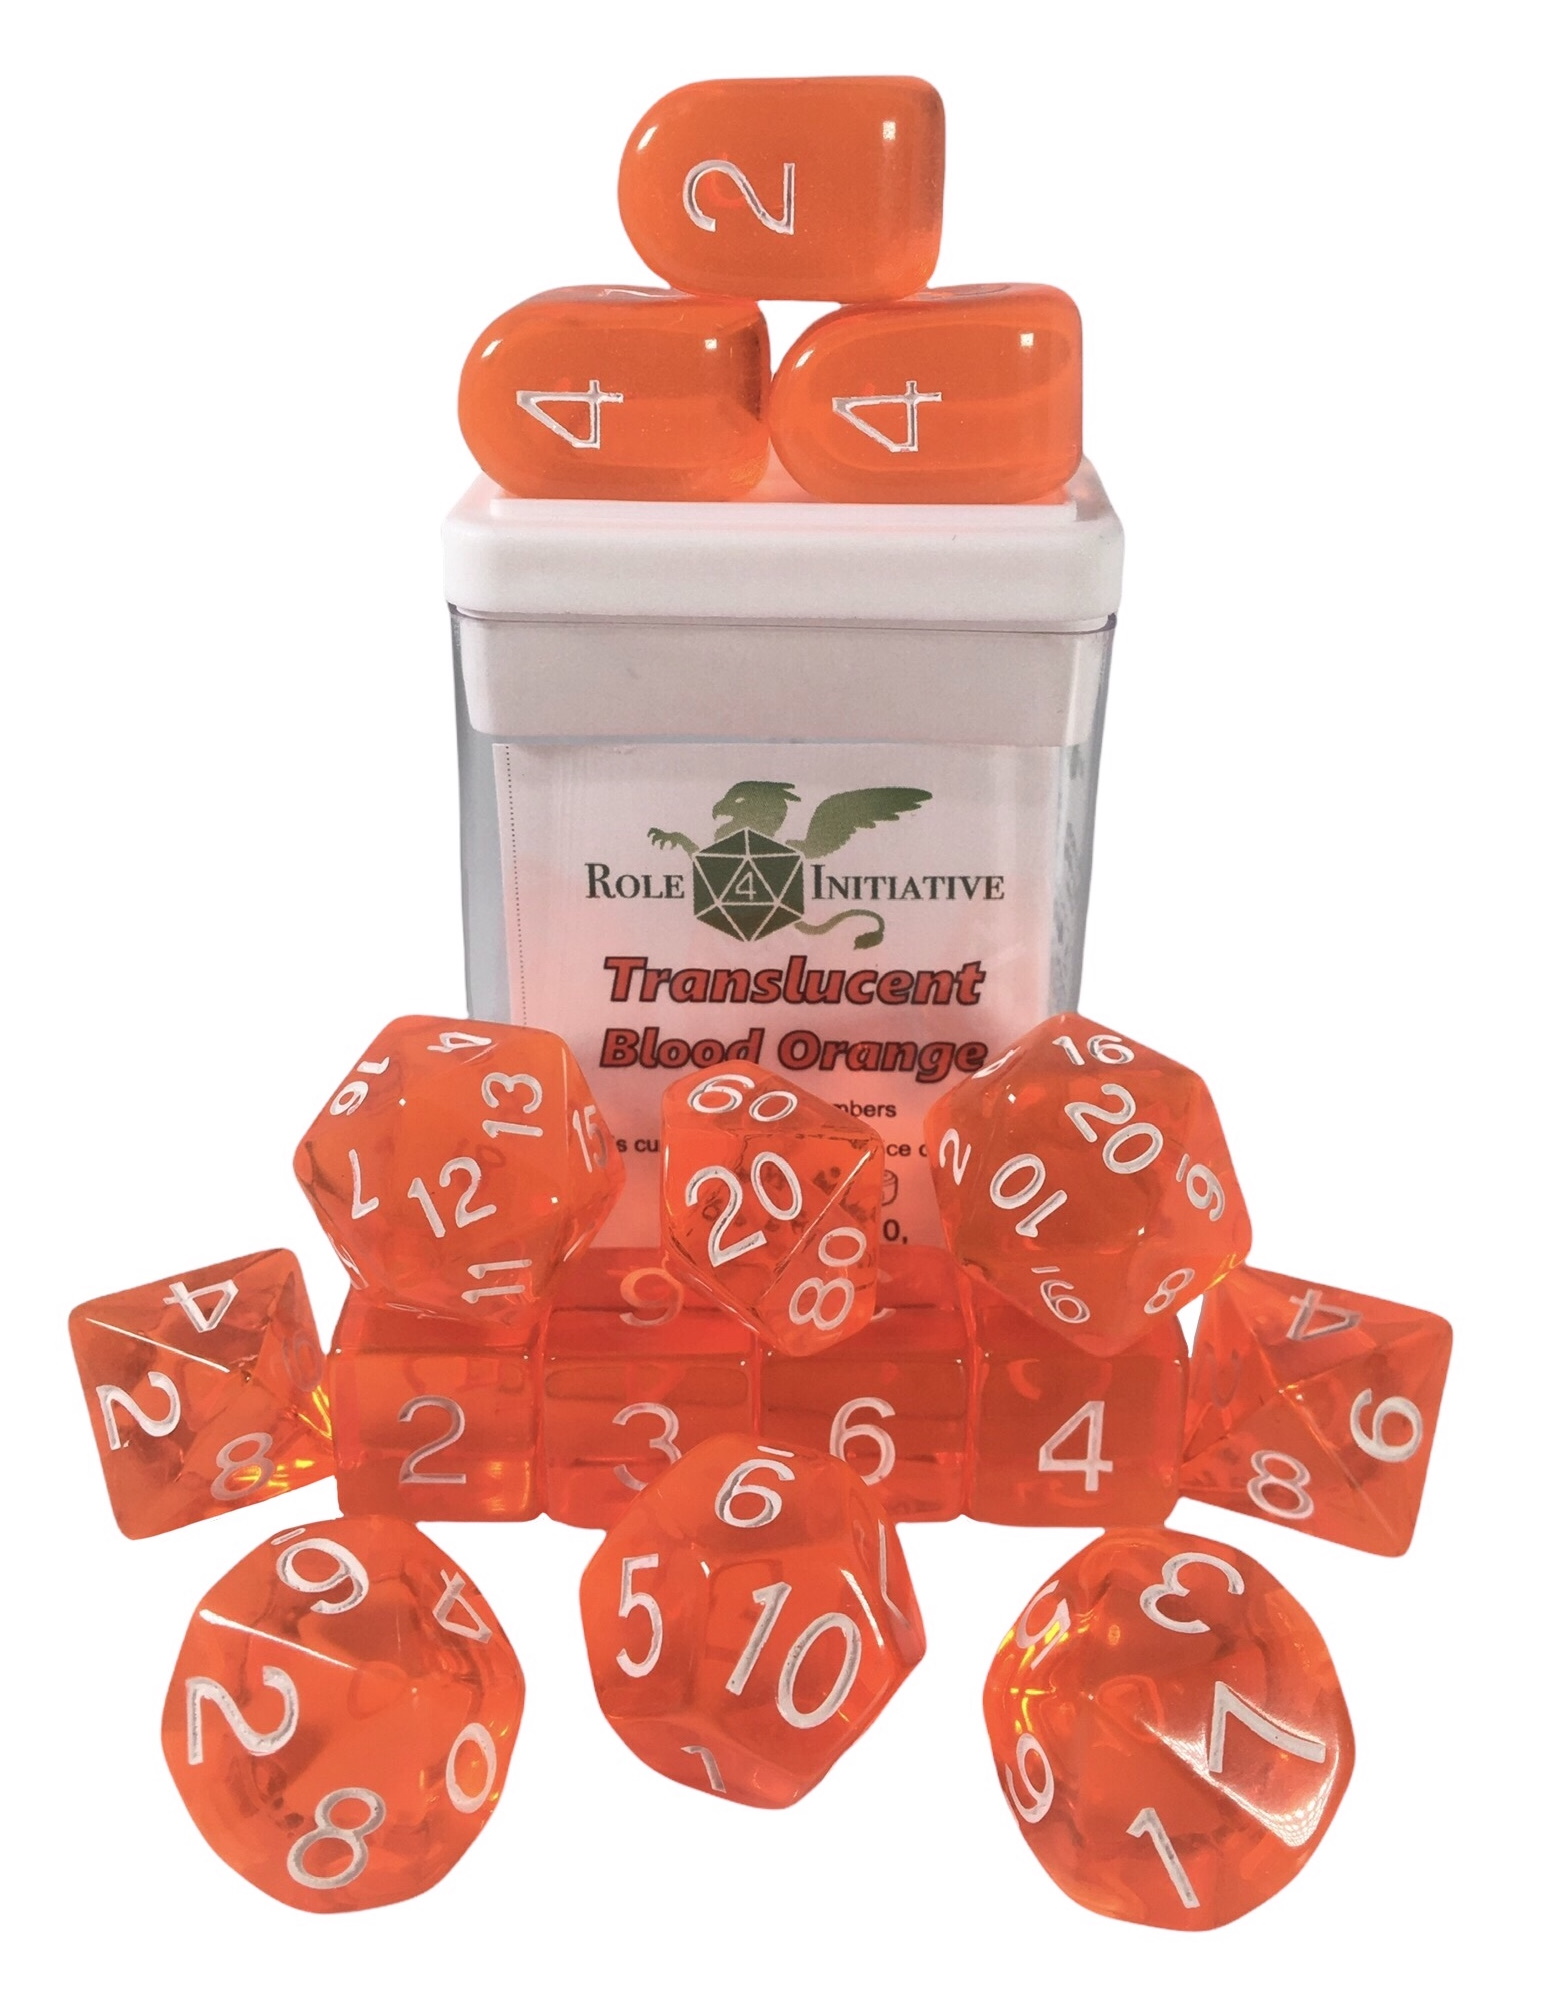 Role 4 Initiative: Polyhedral 15 Dice Set: Translucent Blood Orange/White 